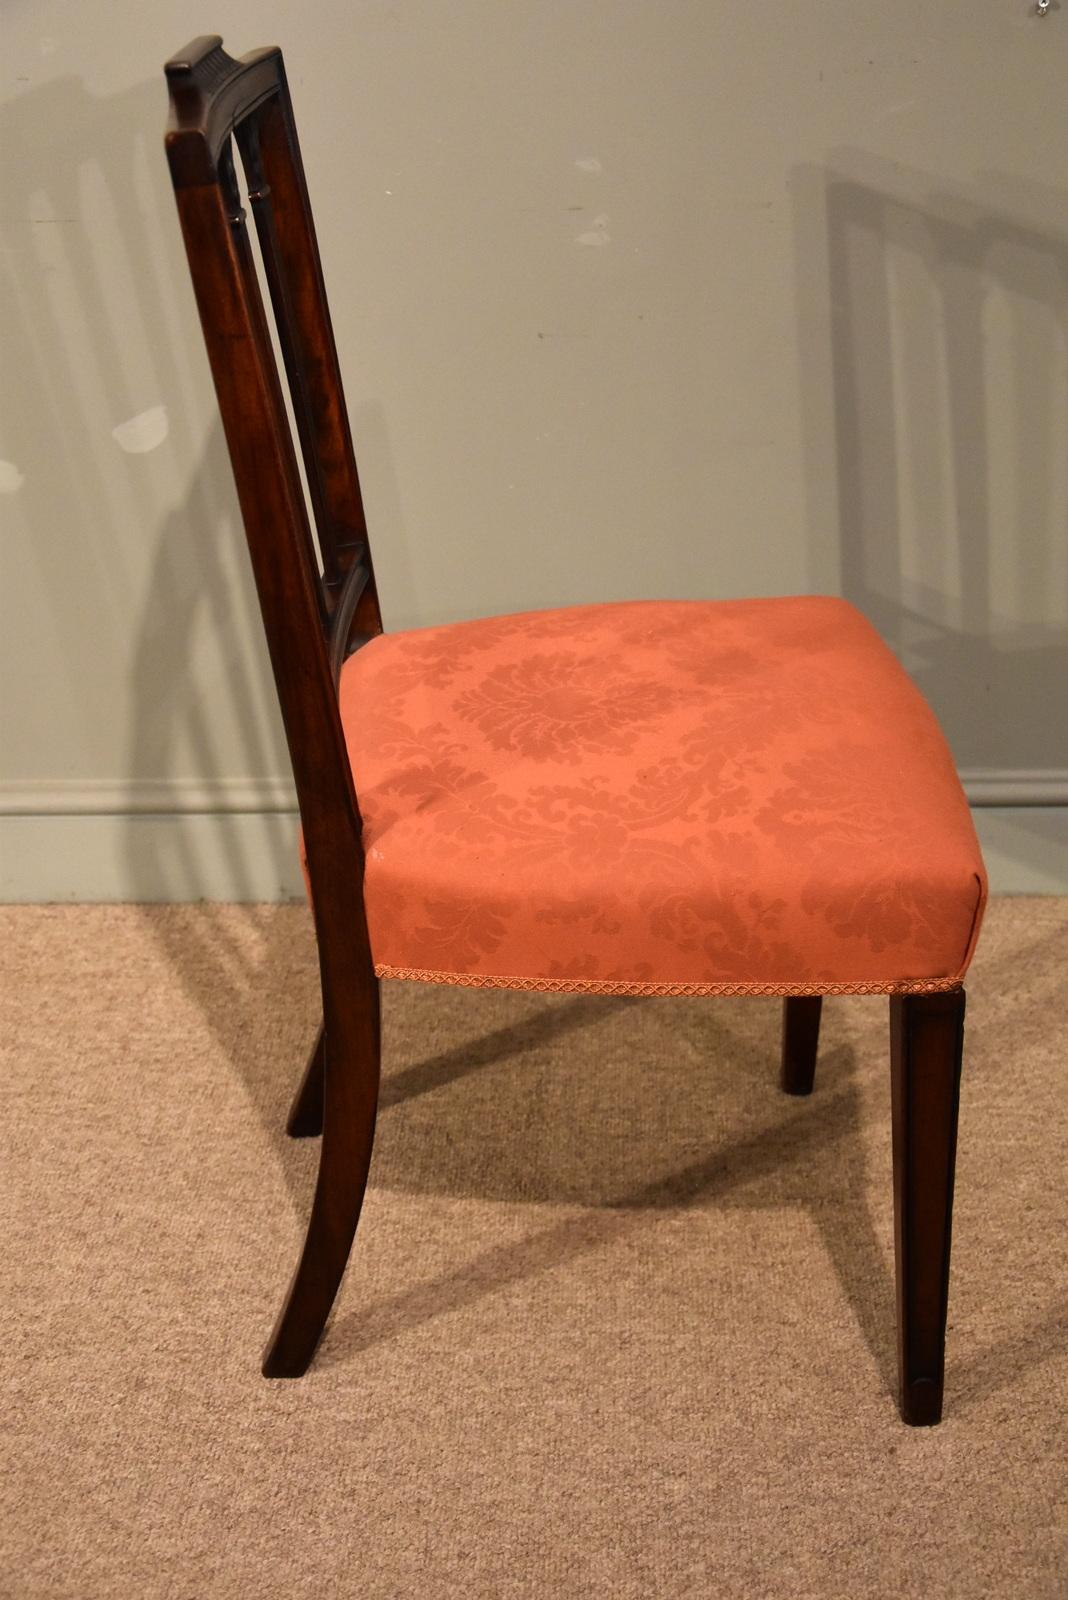 Superb Set of Late 18th Century Mahogany Dining Chairs (18. Jahrhundert und früher)